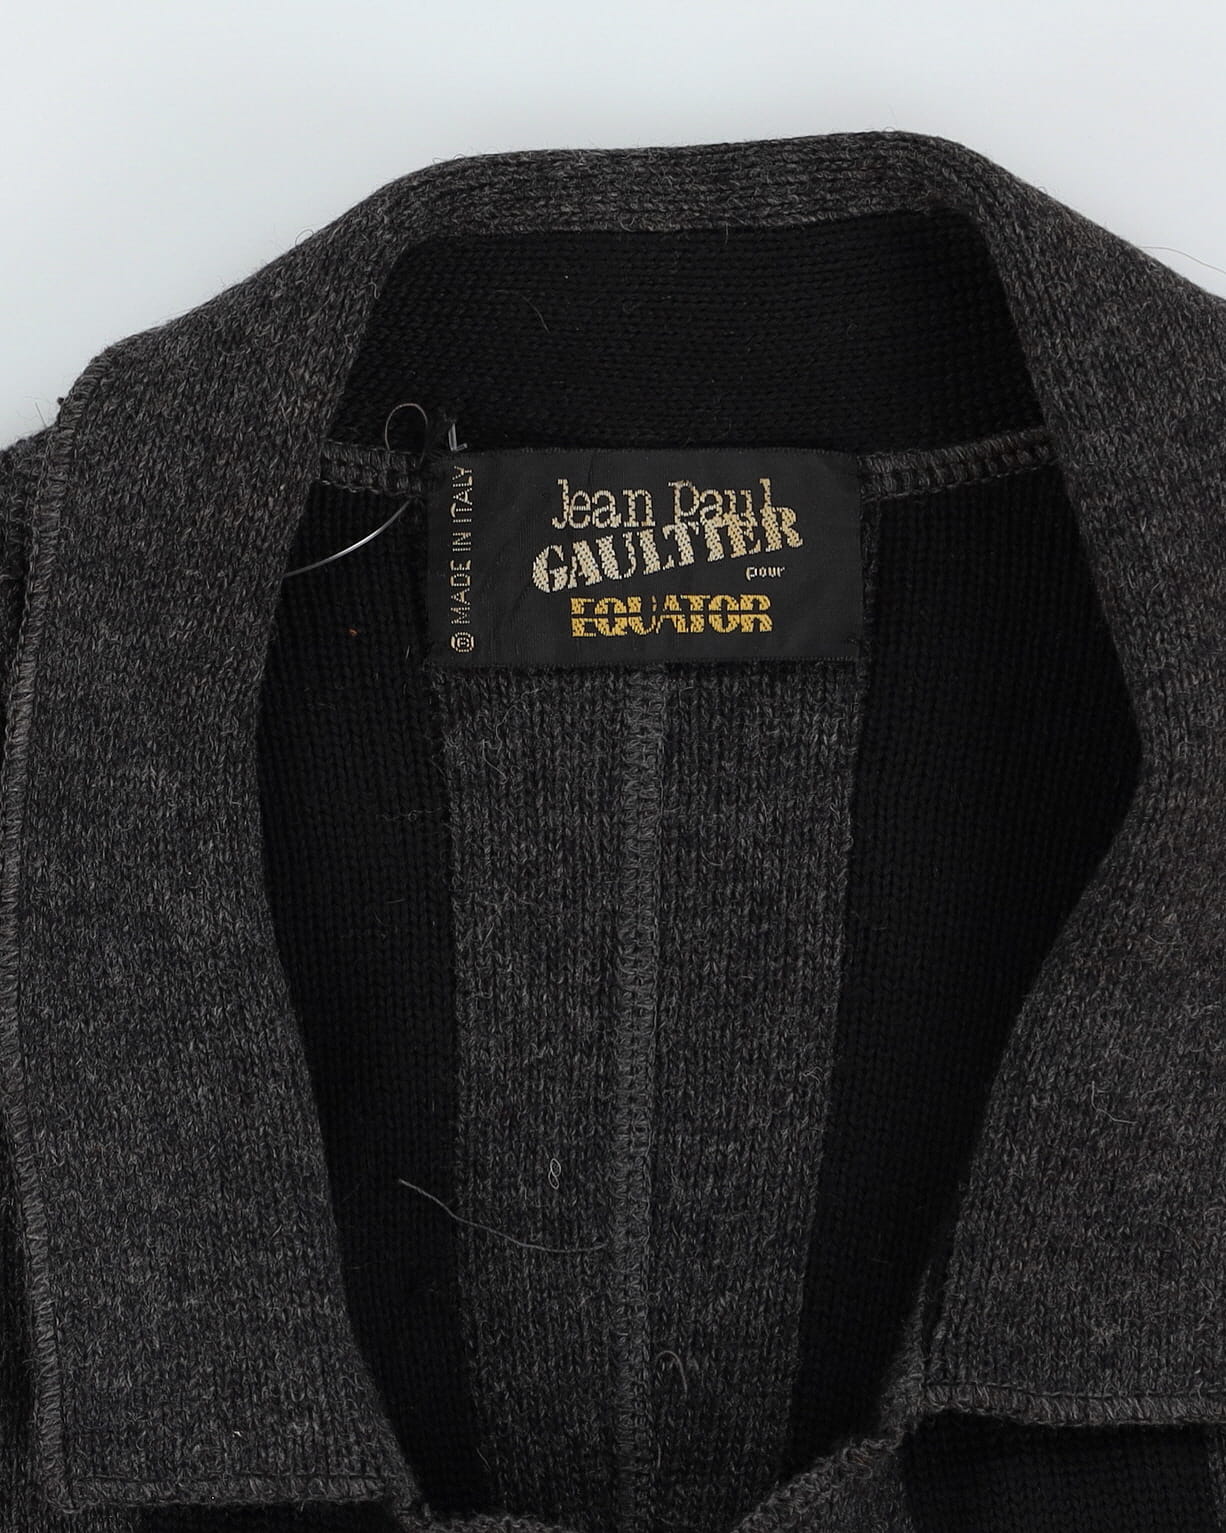 Jean Paul Gaultier Equator 1990s Knitted Blazer Jacket - M